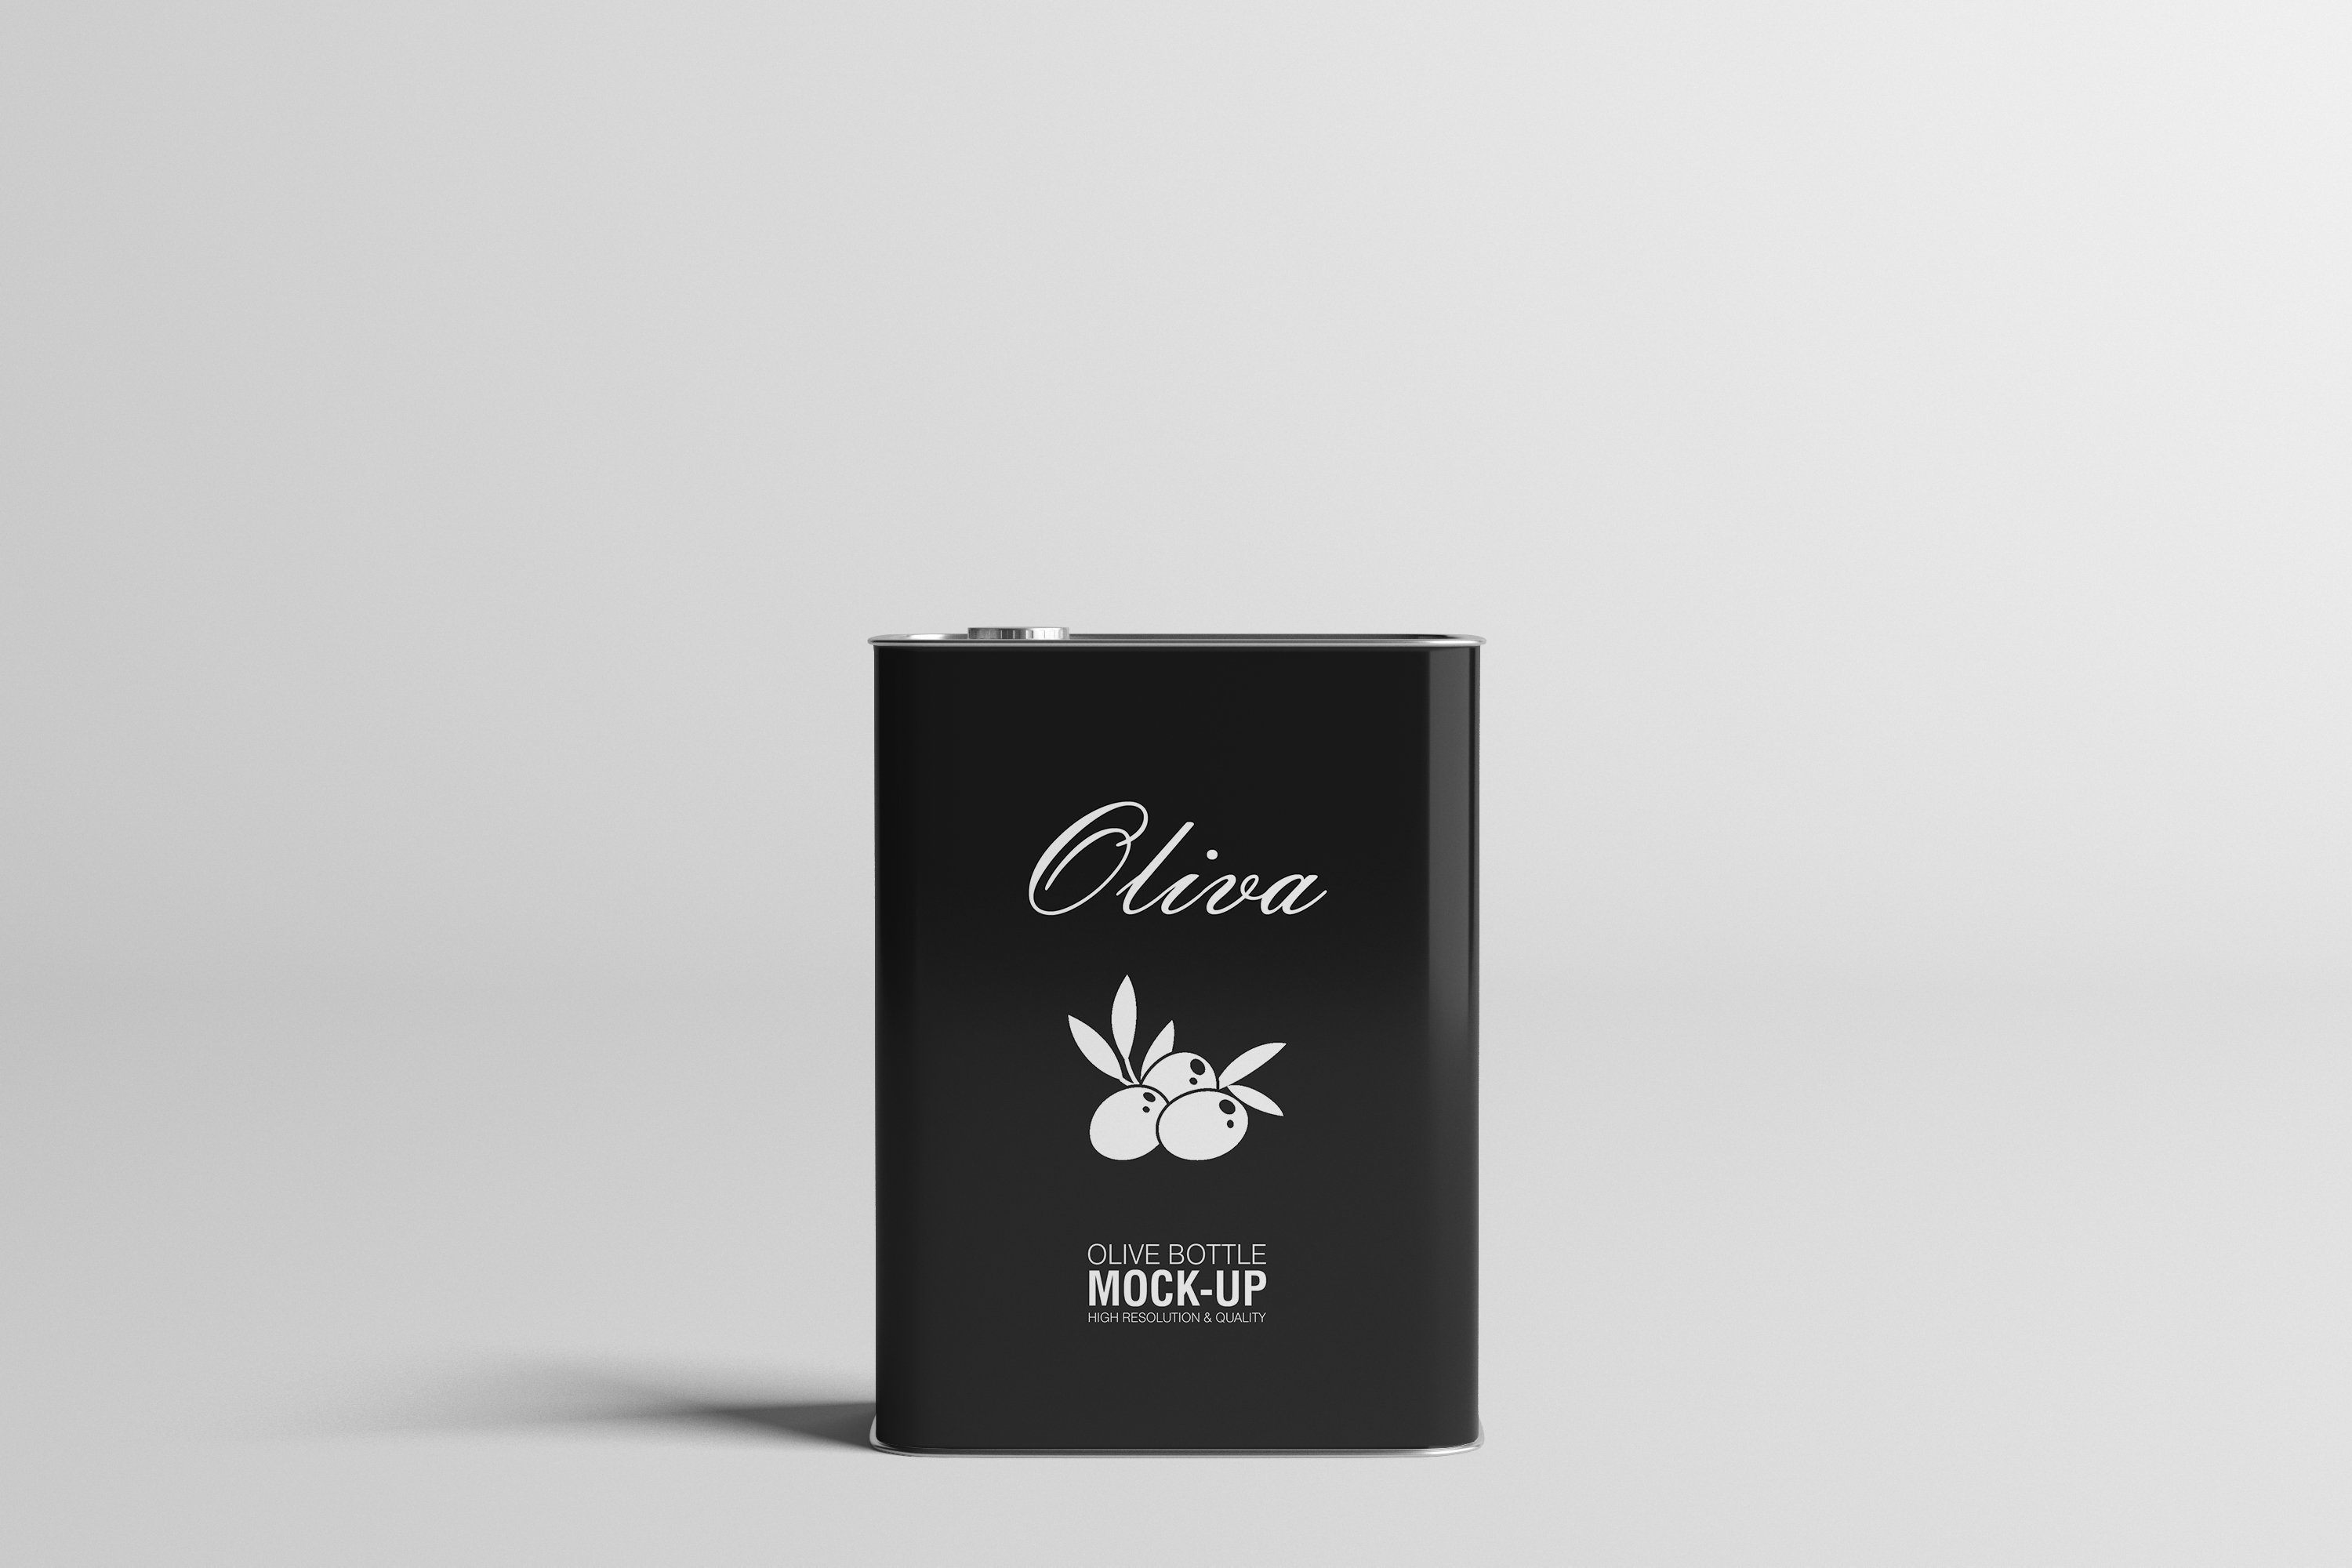 Metal glance black jam with silver olive logo.